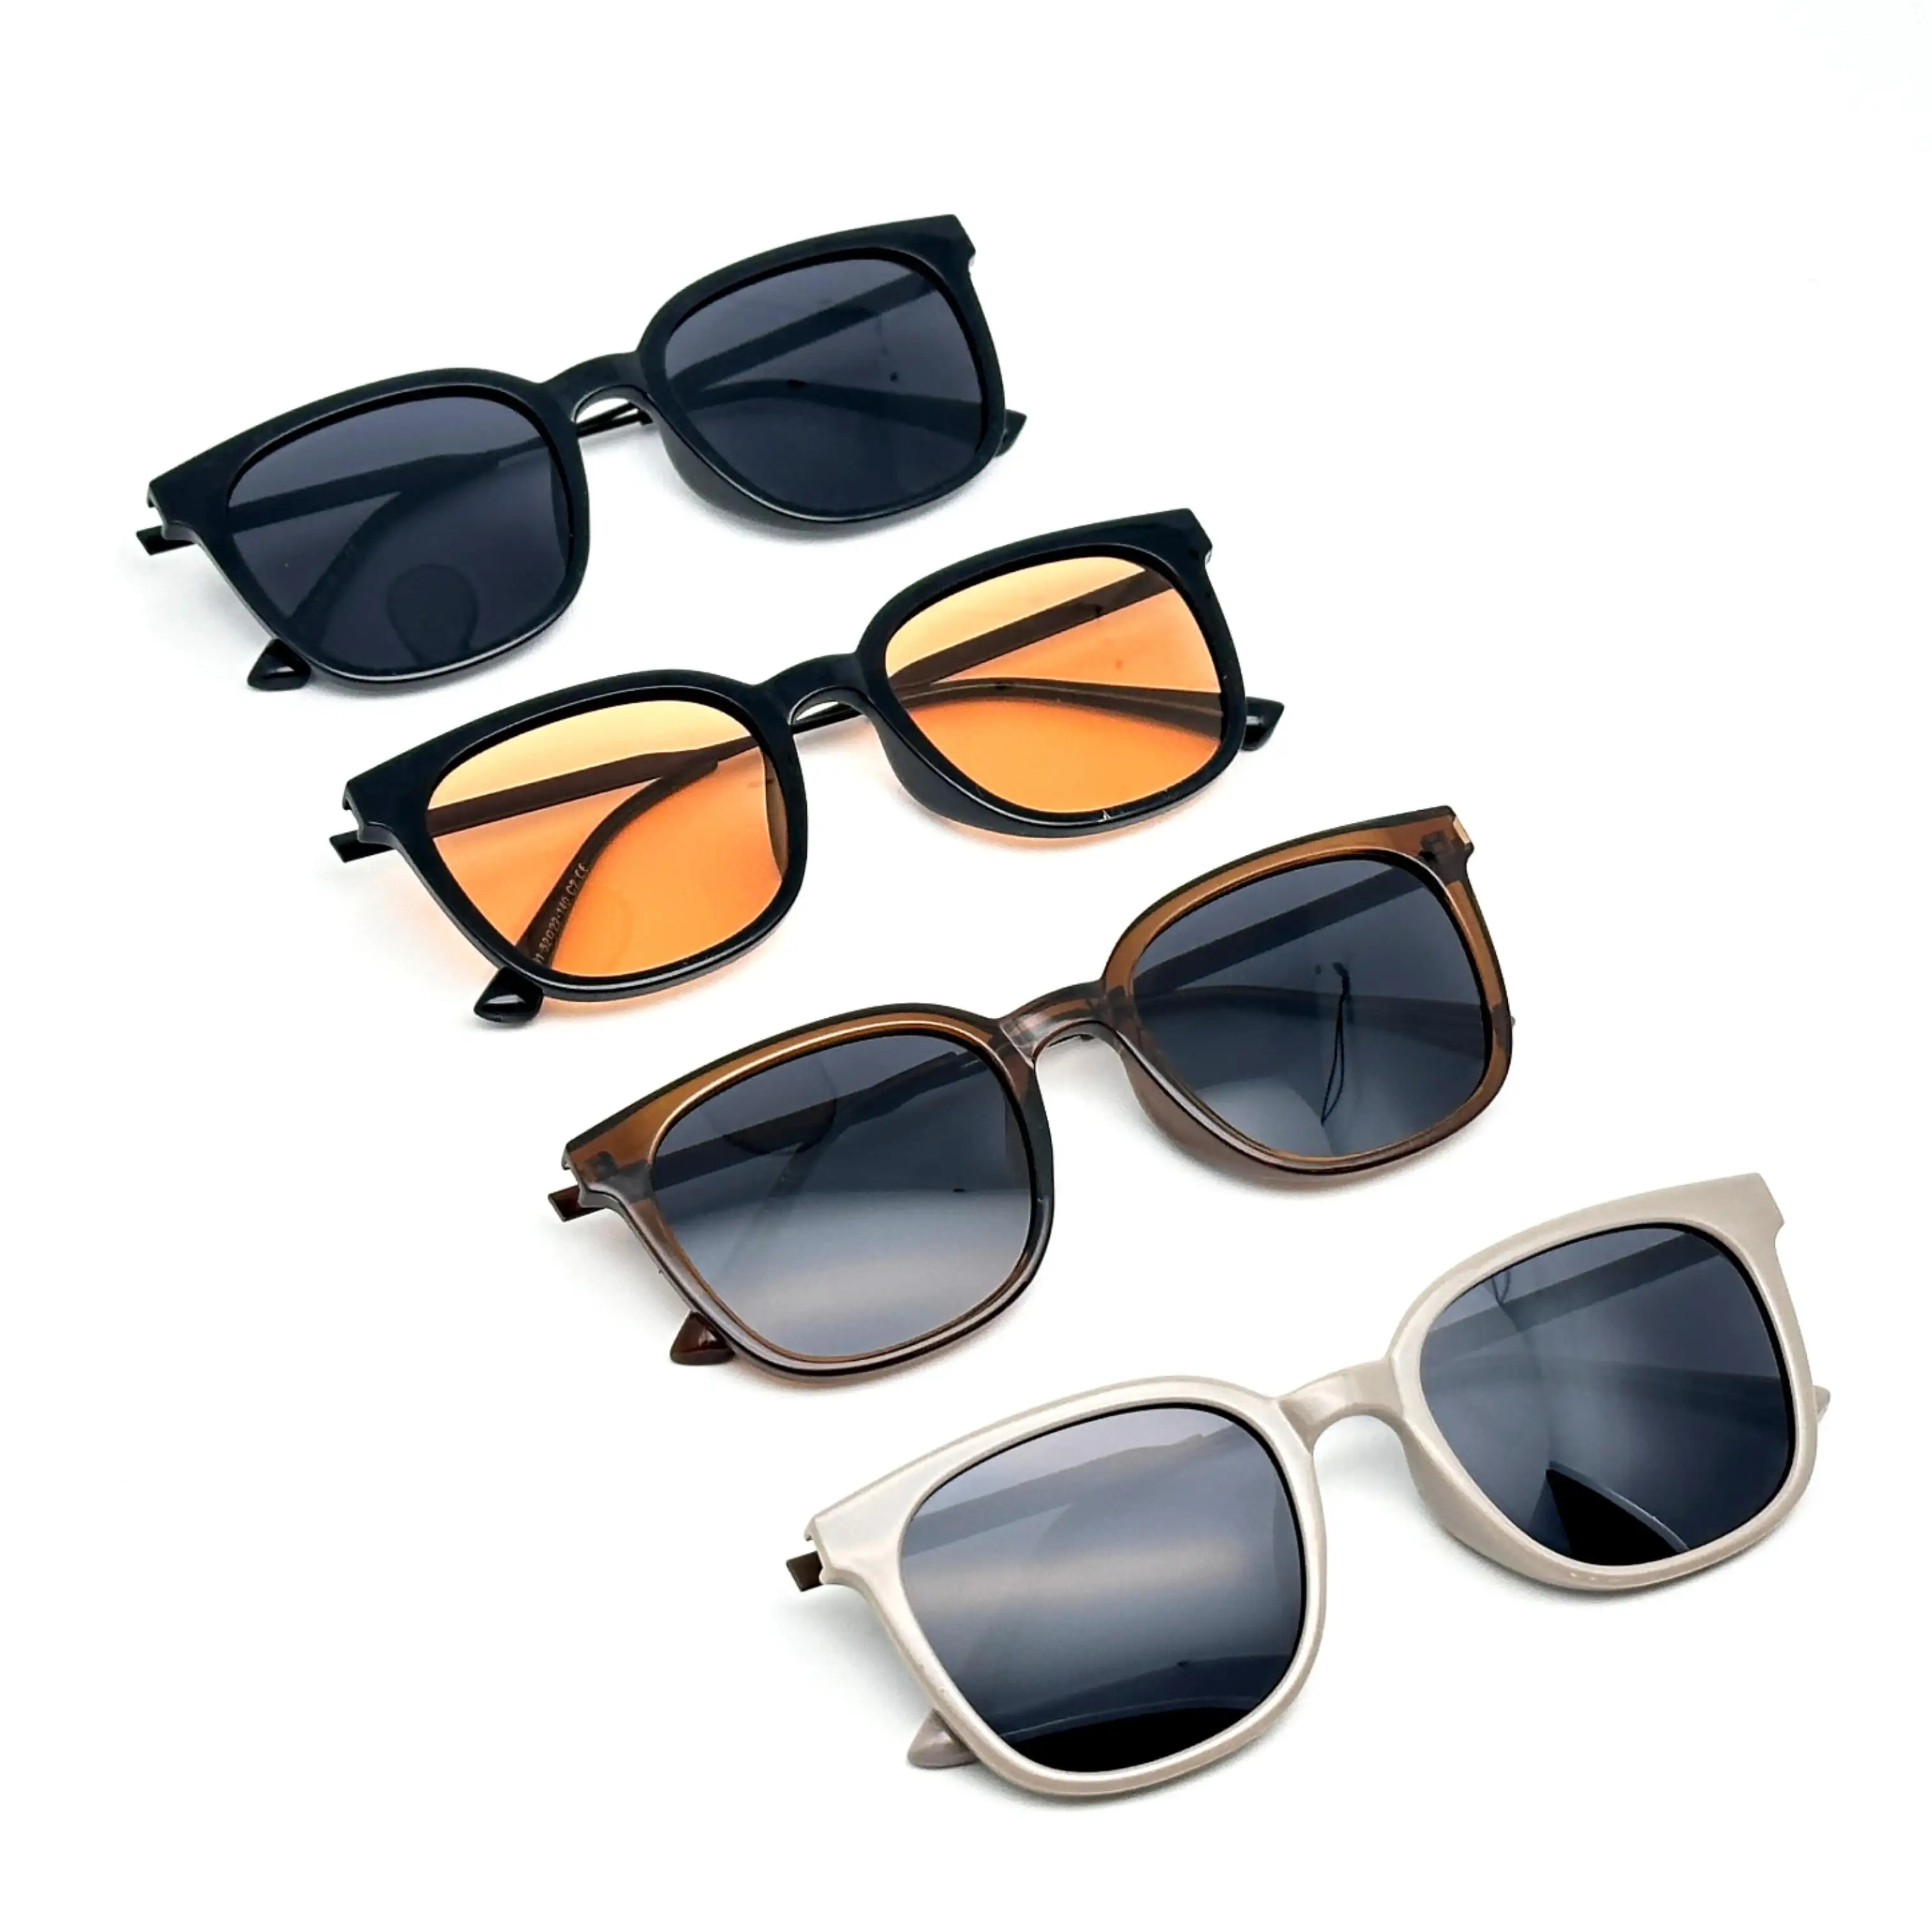 Promozionali all'ingrosso di lusso Custom tonalità Premium donne Designer di marca nera occhiali da sole da uomo quadrati occhiali da sole